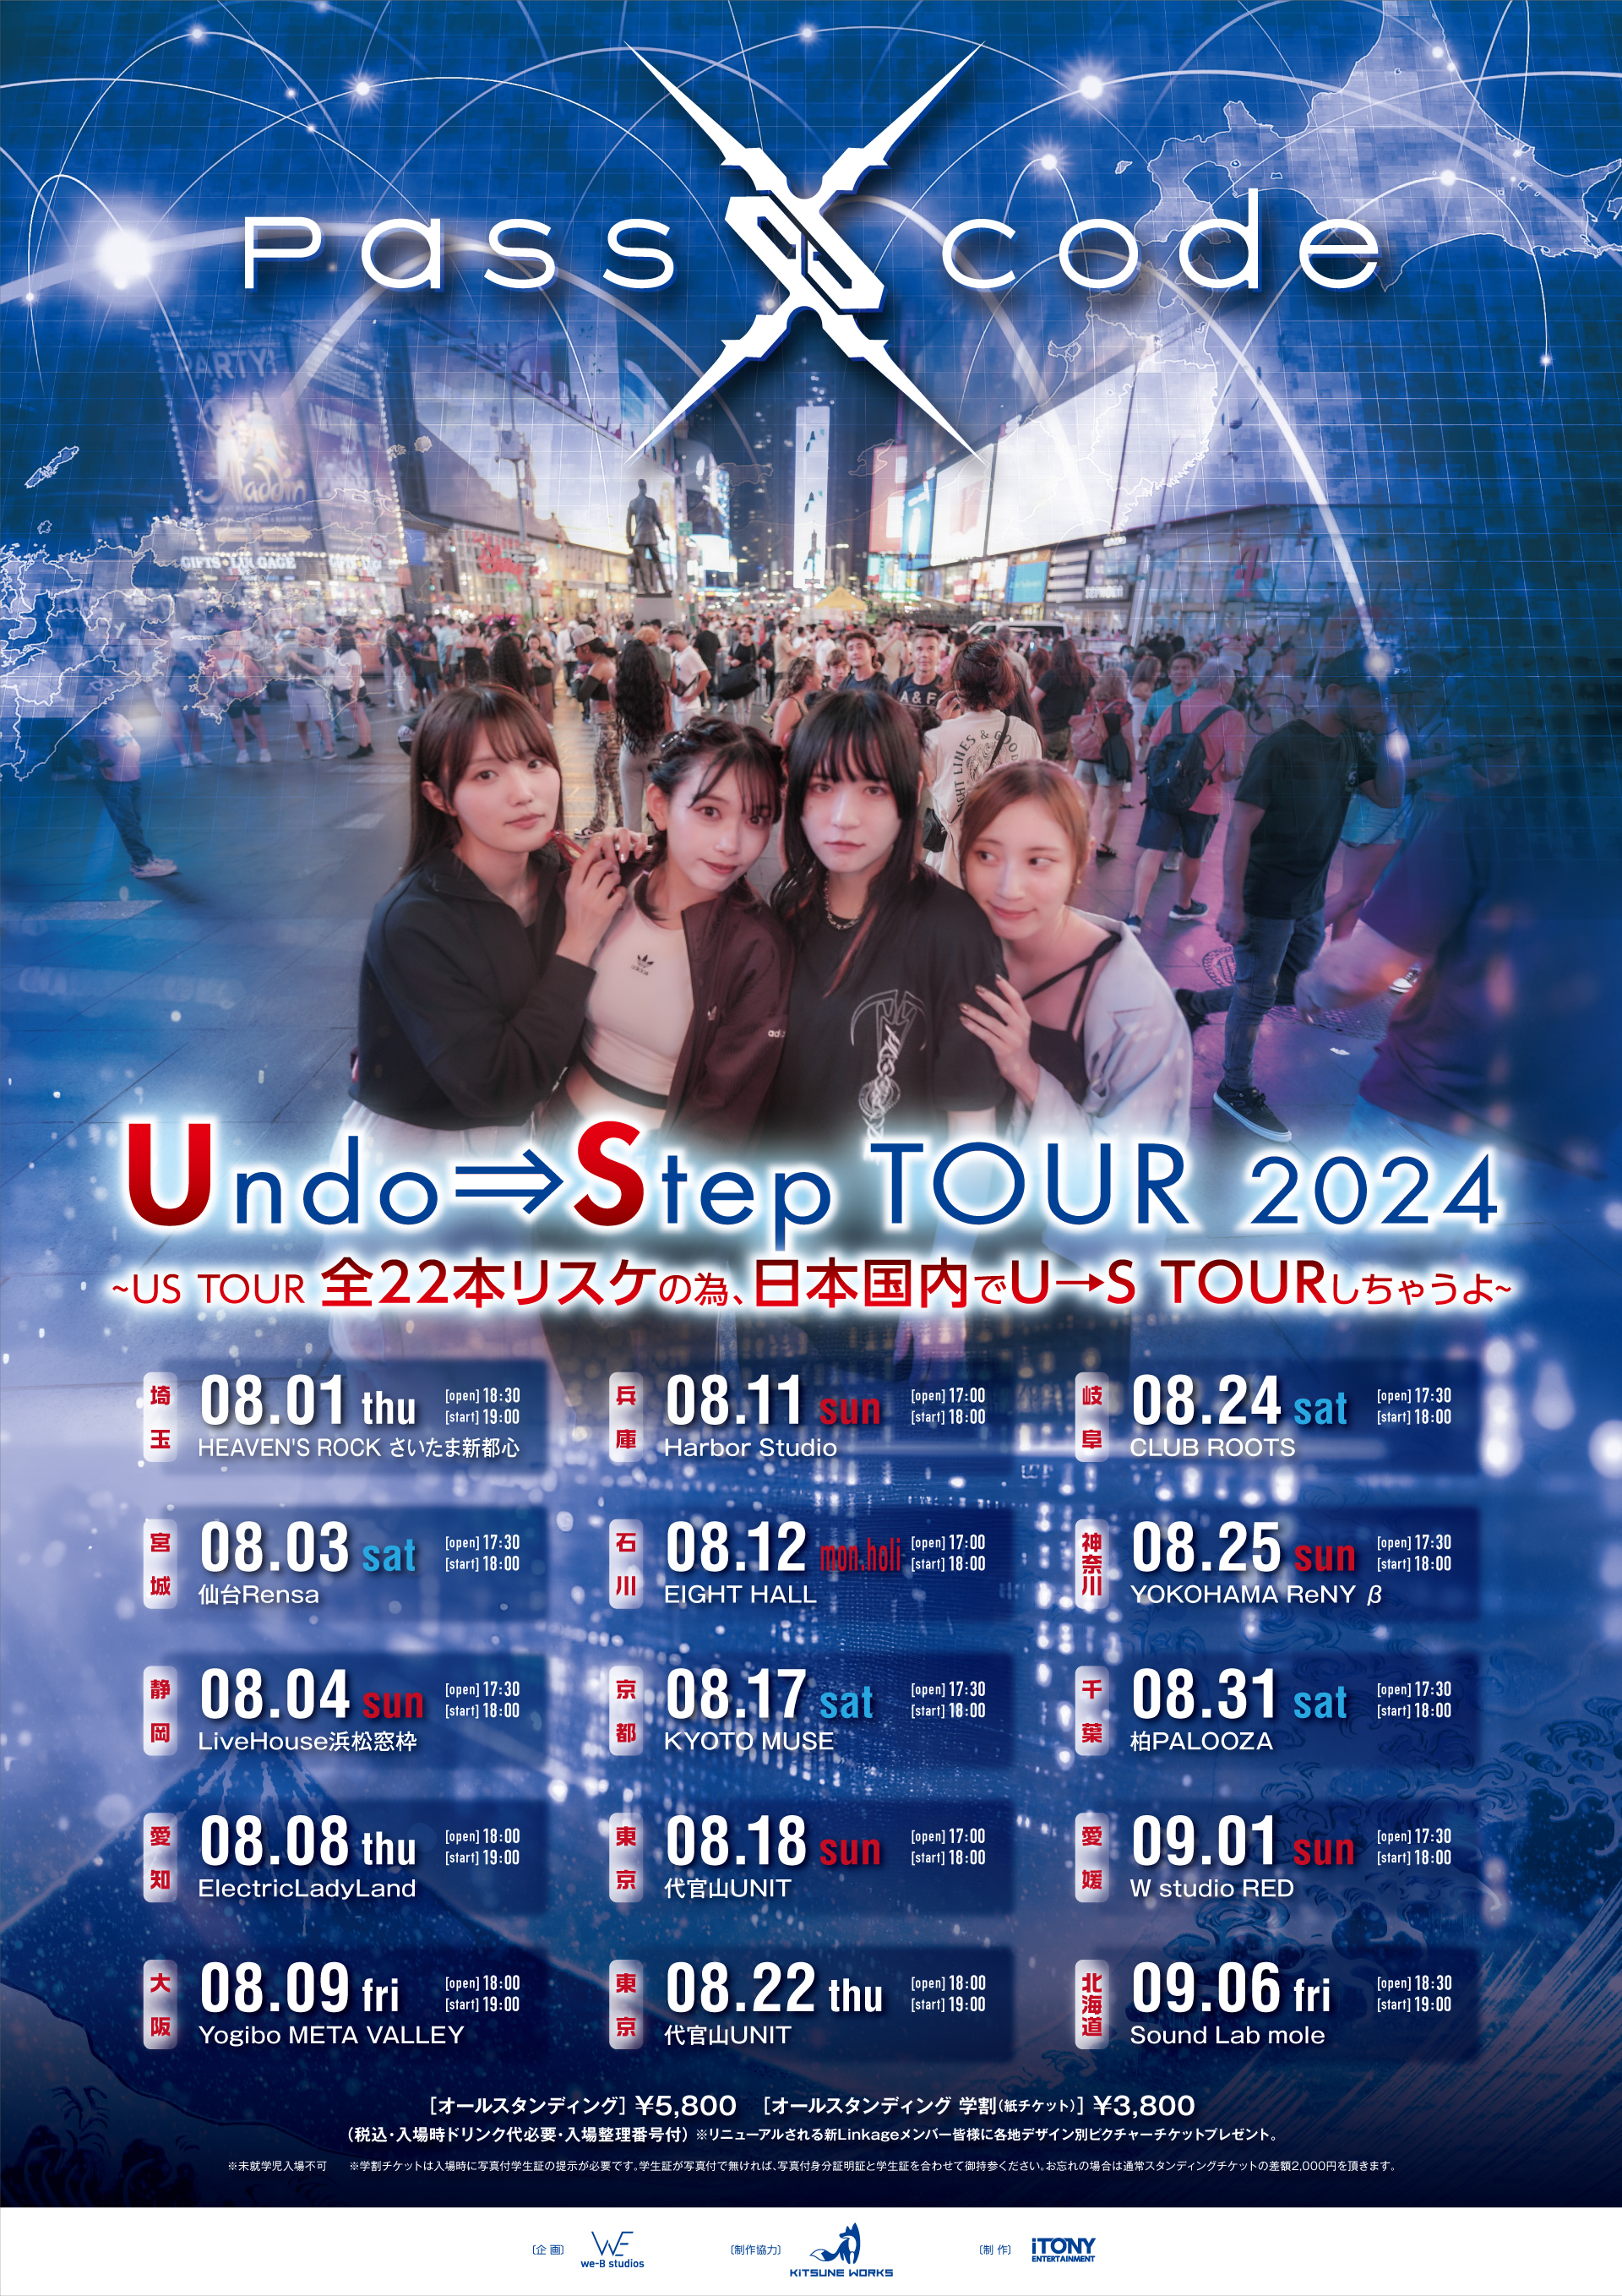 PassCode Undo→Step TOUR 2024 〜US TOUR 全22本リスケの為、日本国内でU→S TOURしちゃうよ〜